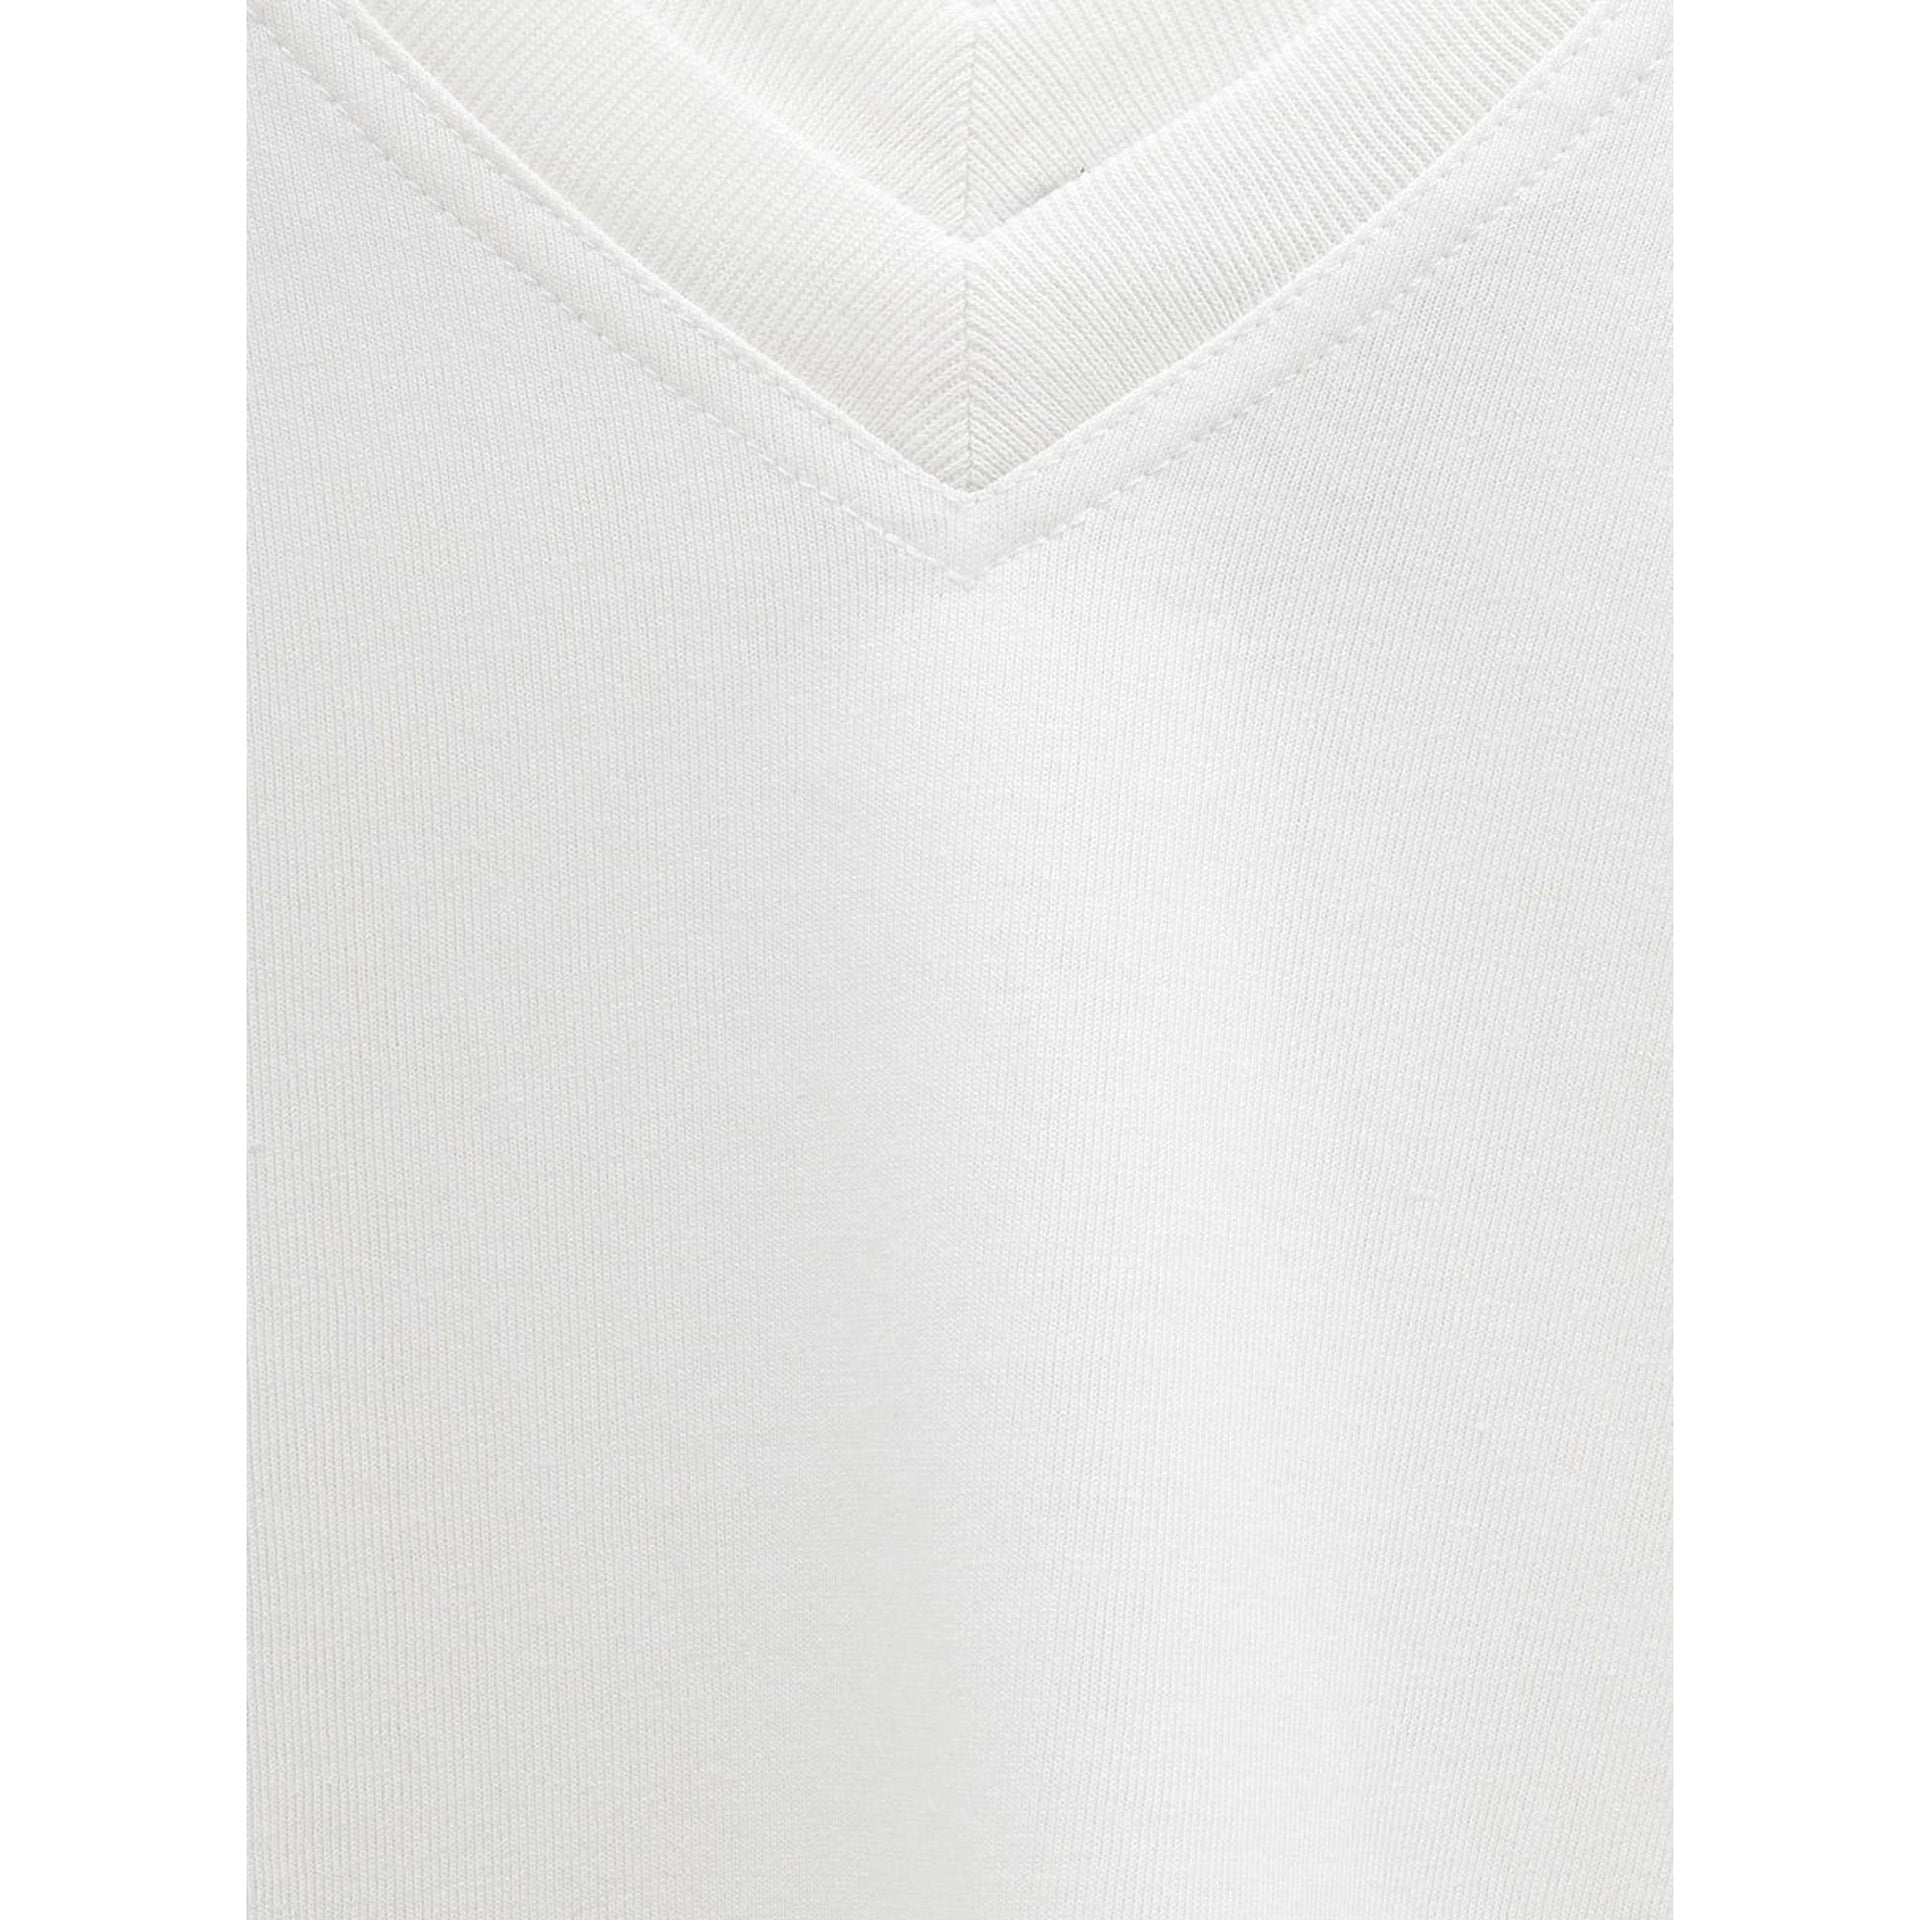 BOTTEGA VENETA-Bottega Veneta Cotton T-Shirt-WOMEN CLOTHING-Outlet-Sale